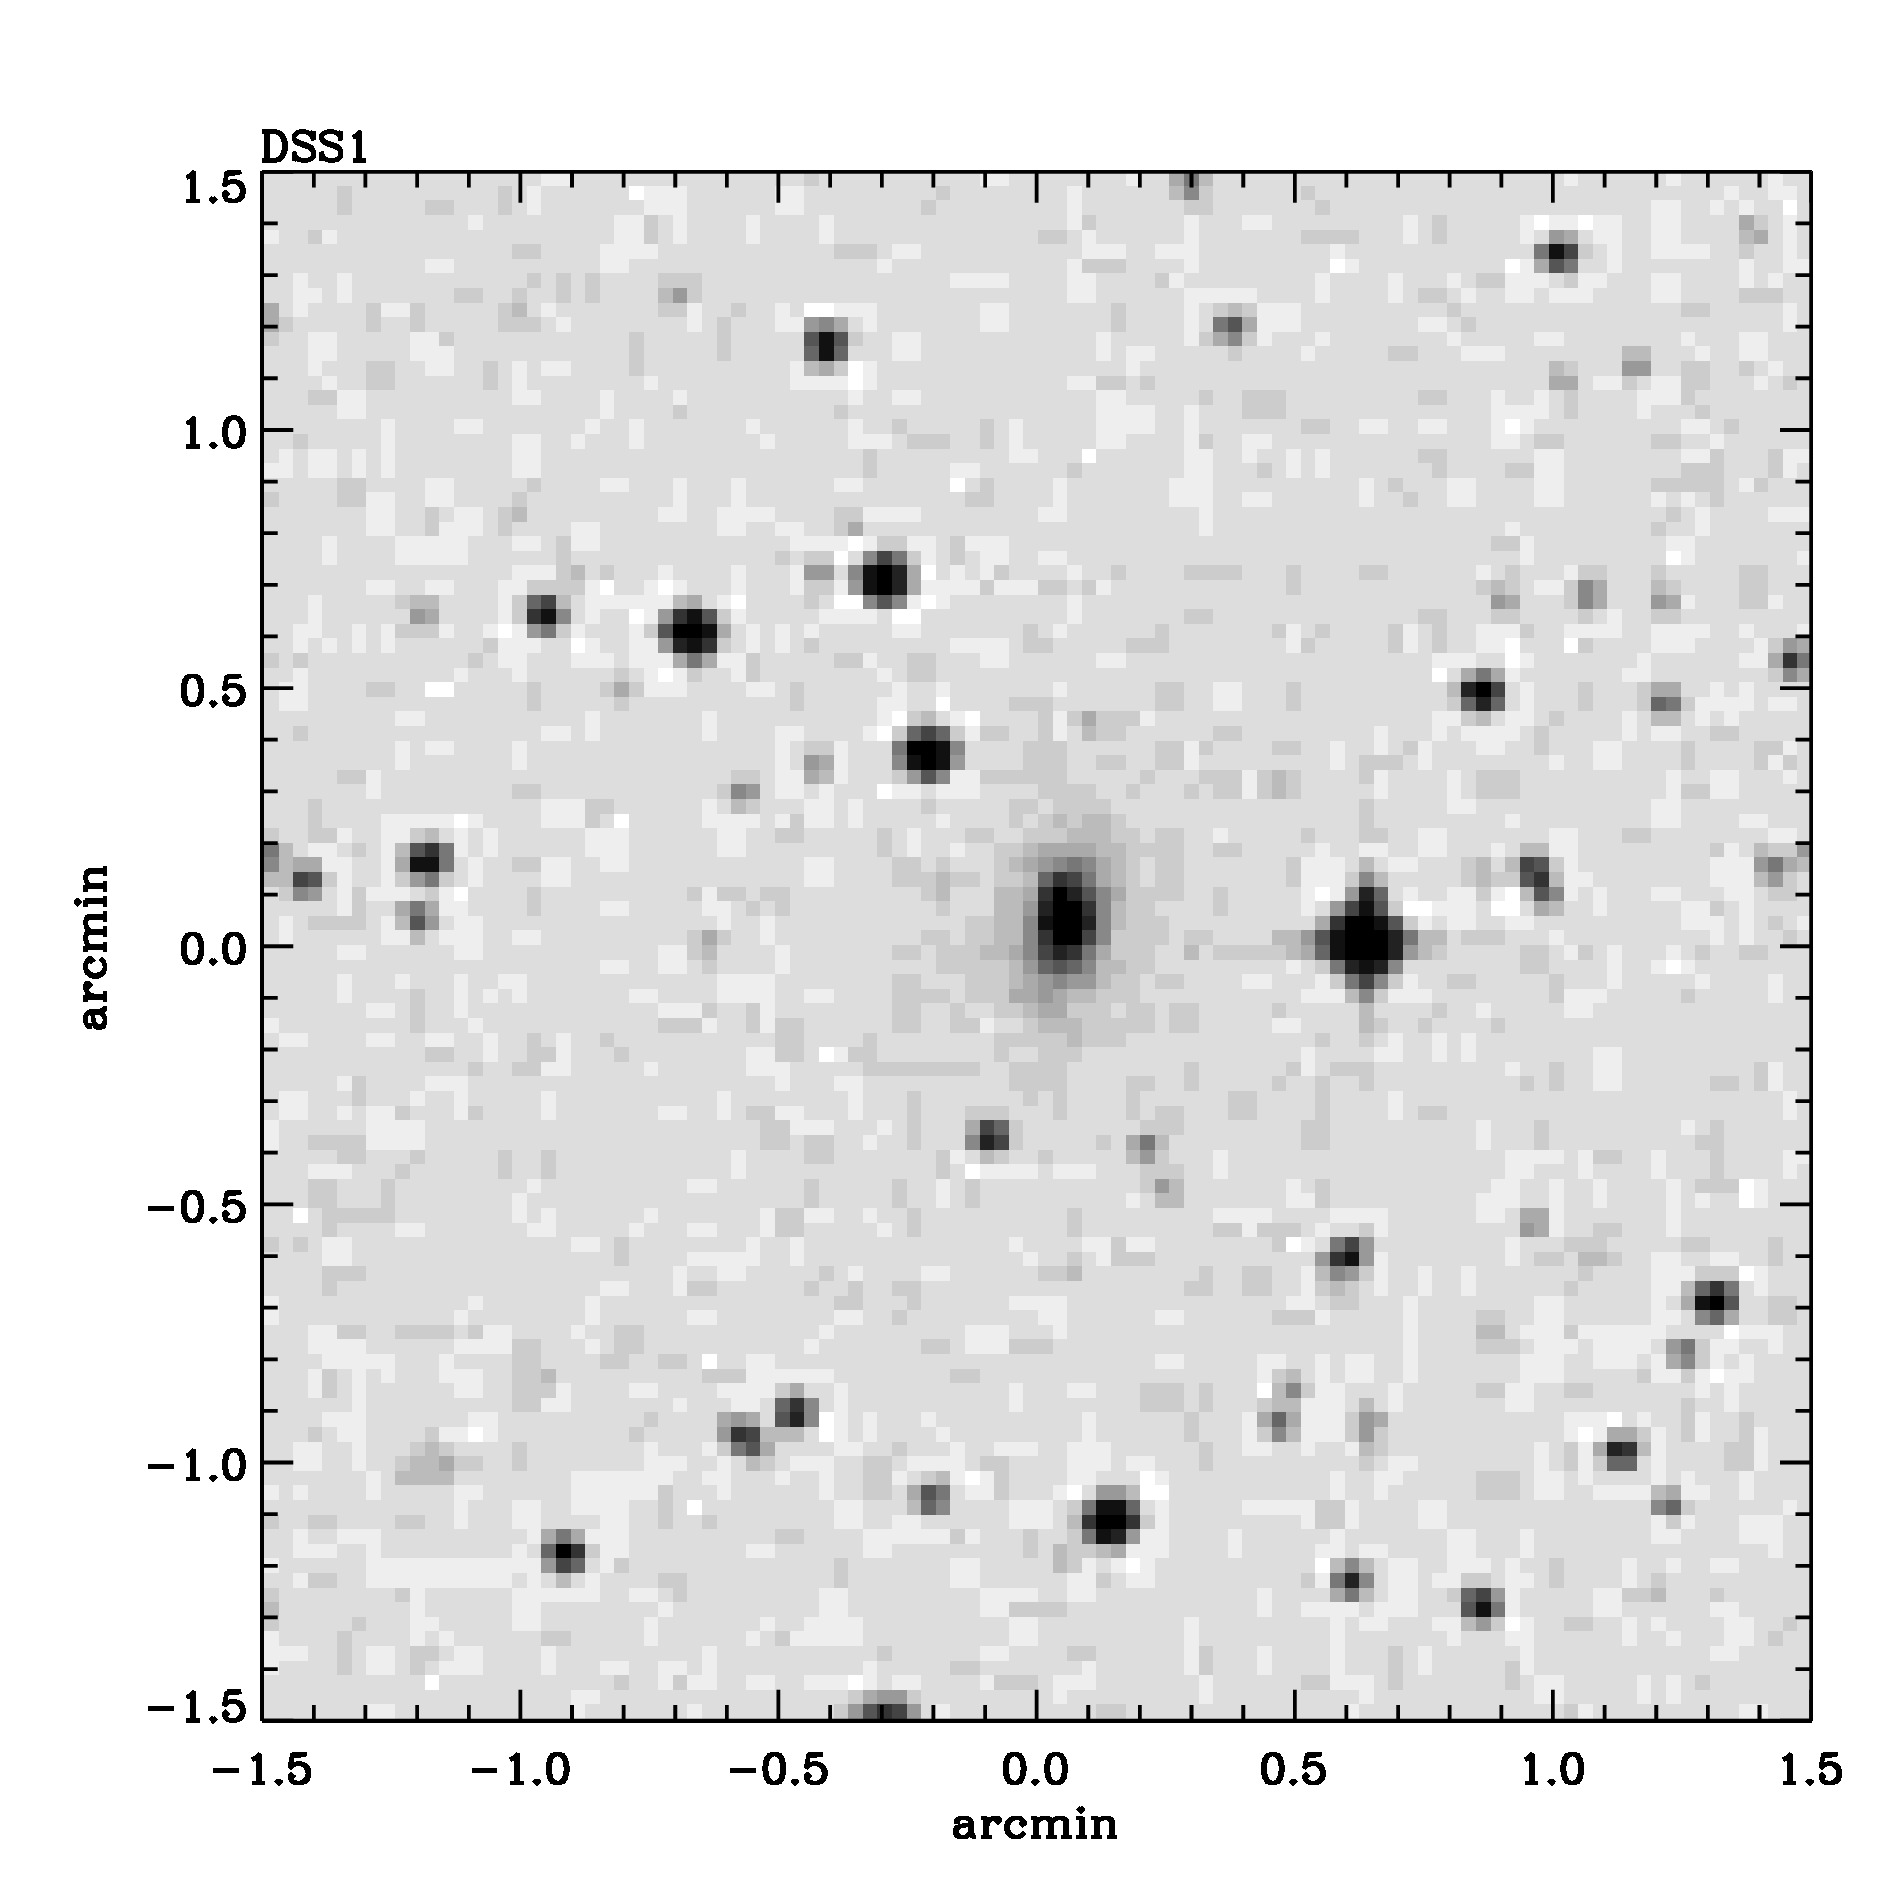 Optical image for SWIFT J0924.2-3141